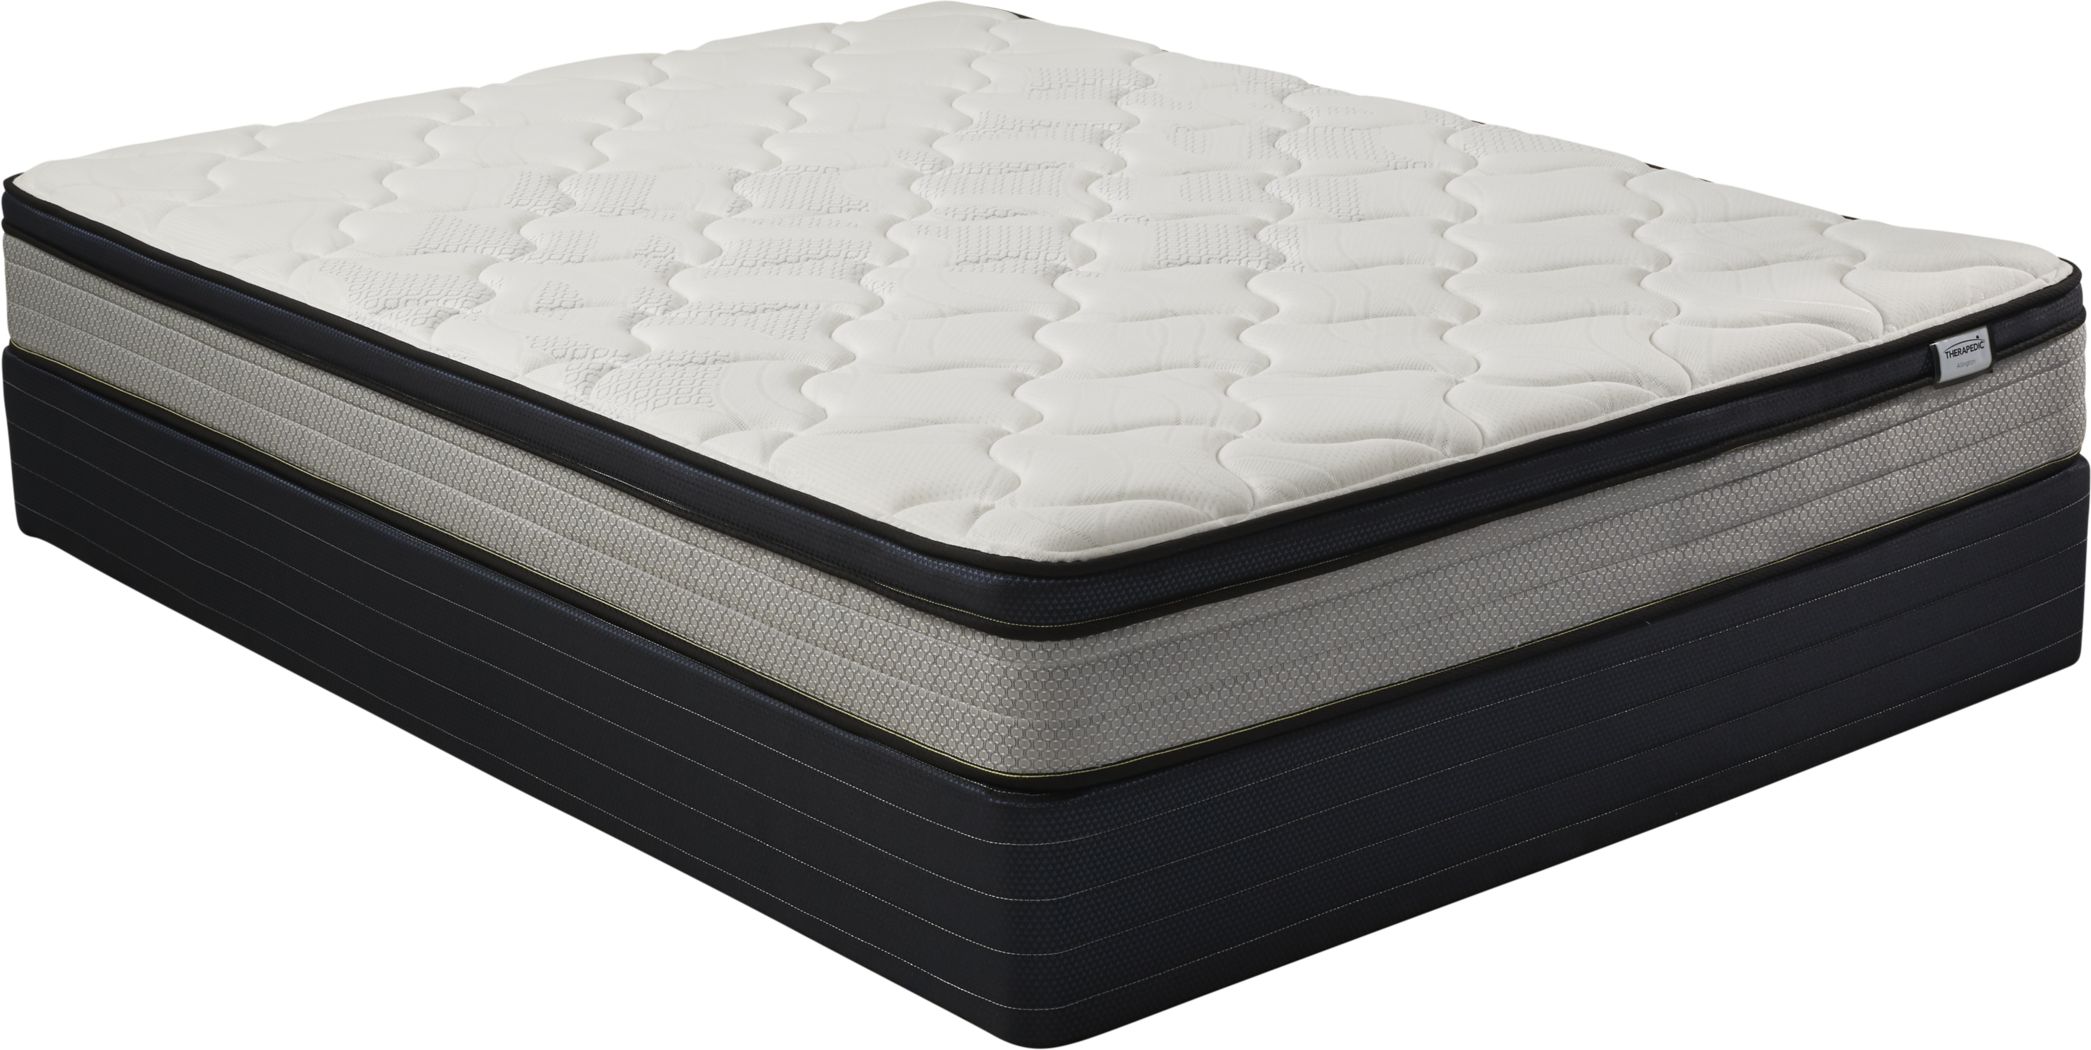 inexpensive mattresses near me